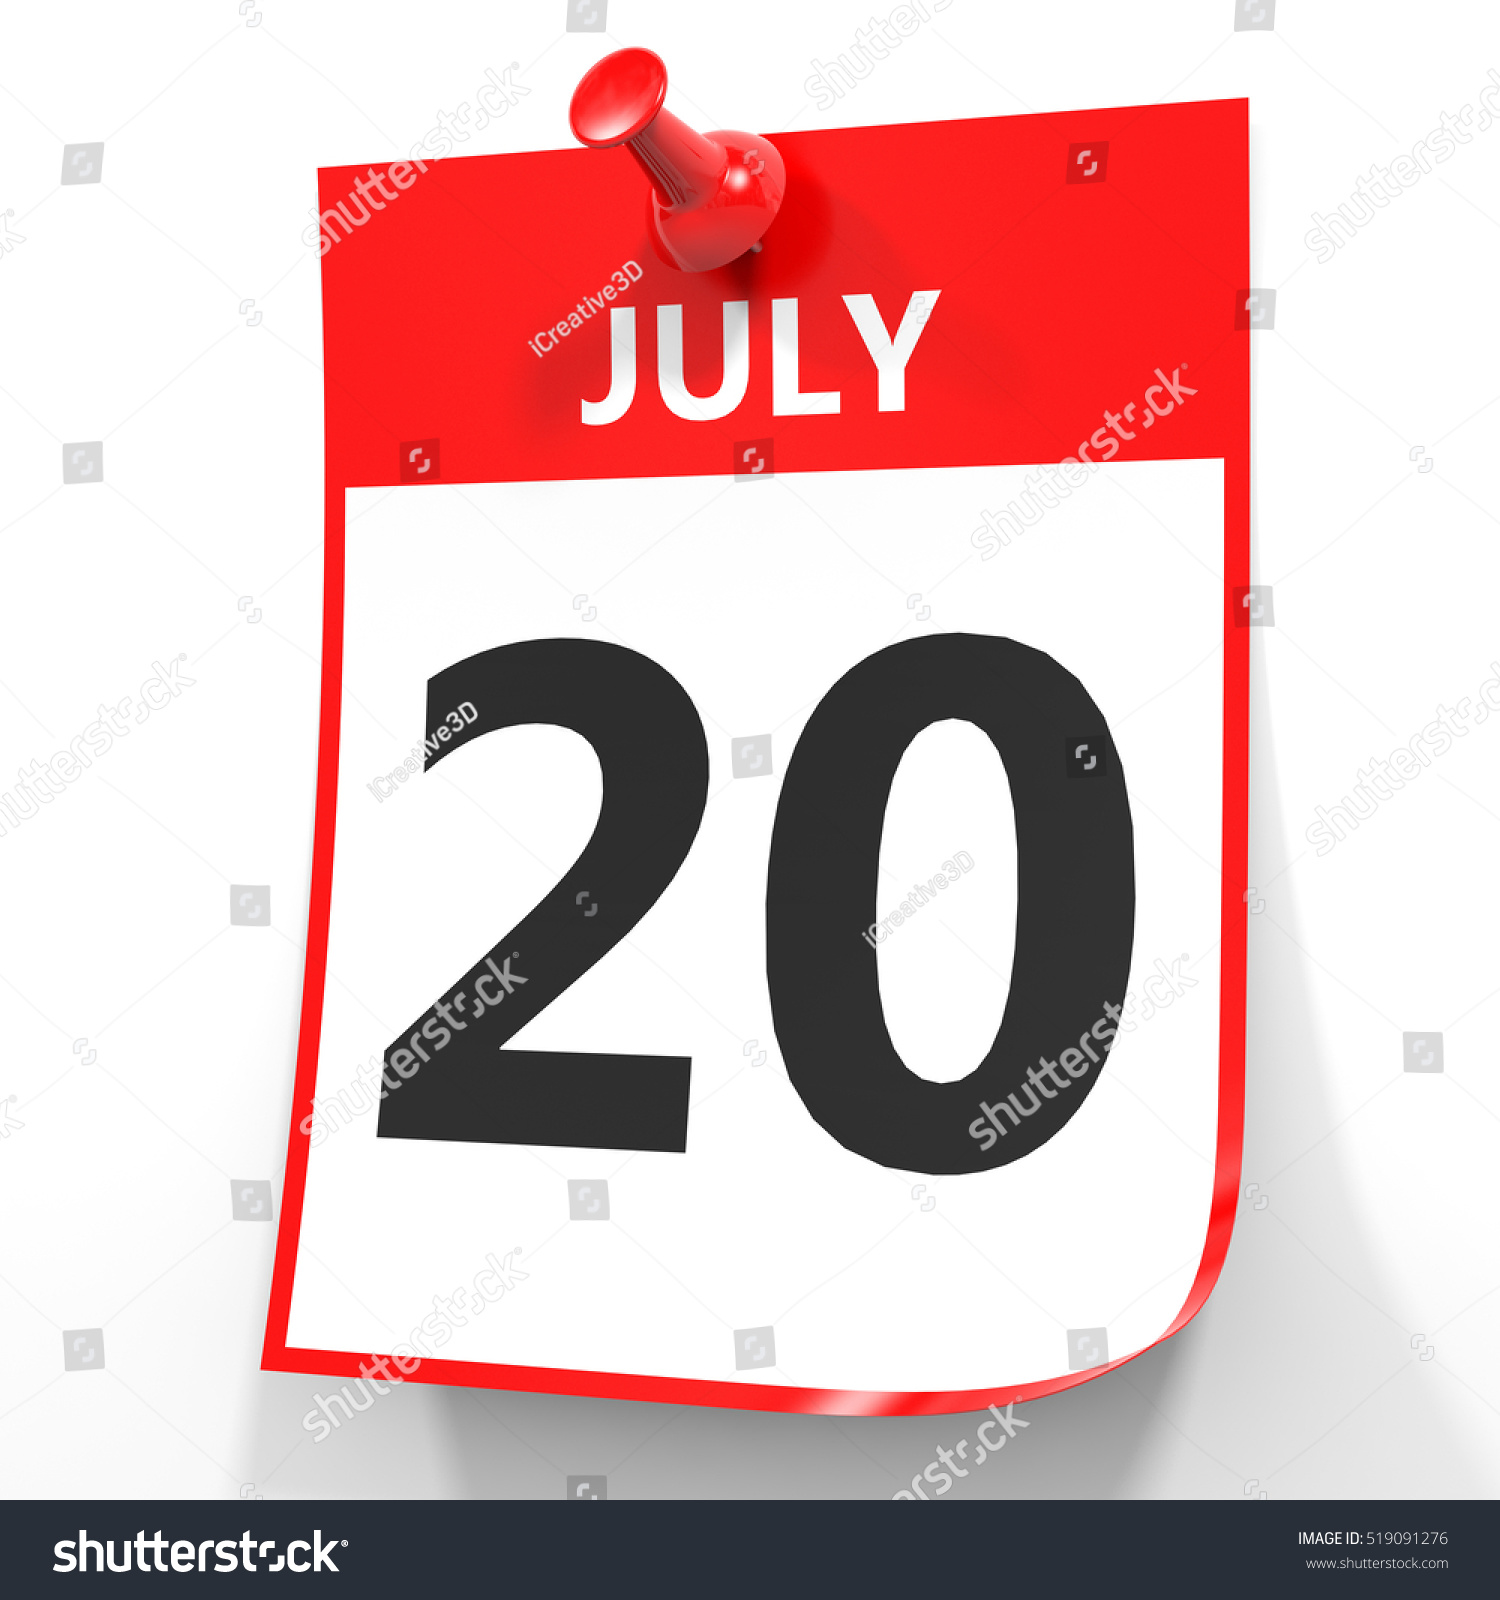 July 20 Calendar On White Background Stock Illustration 519091276